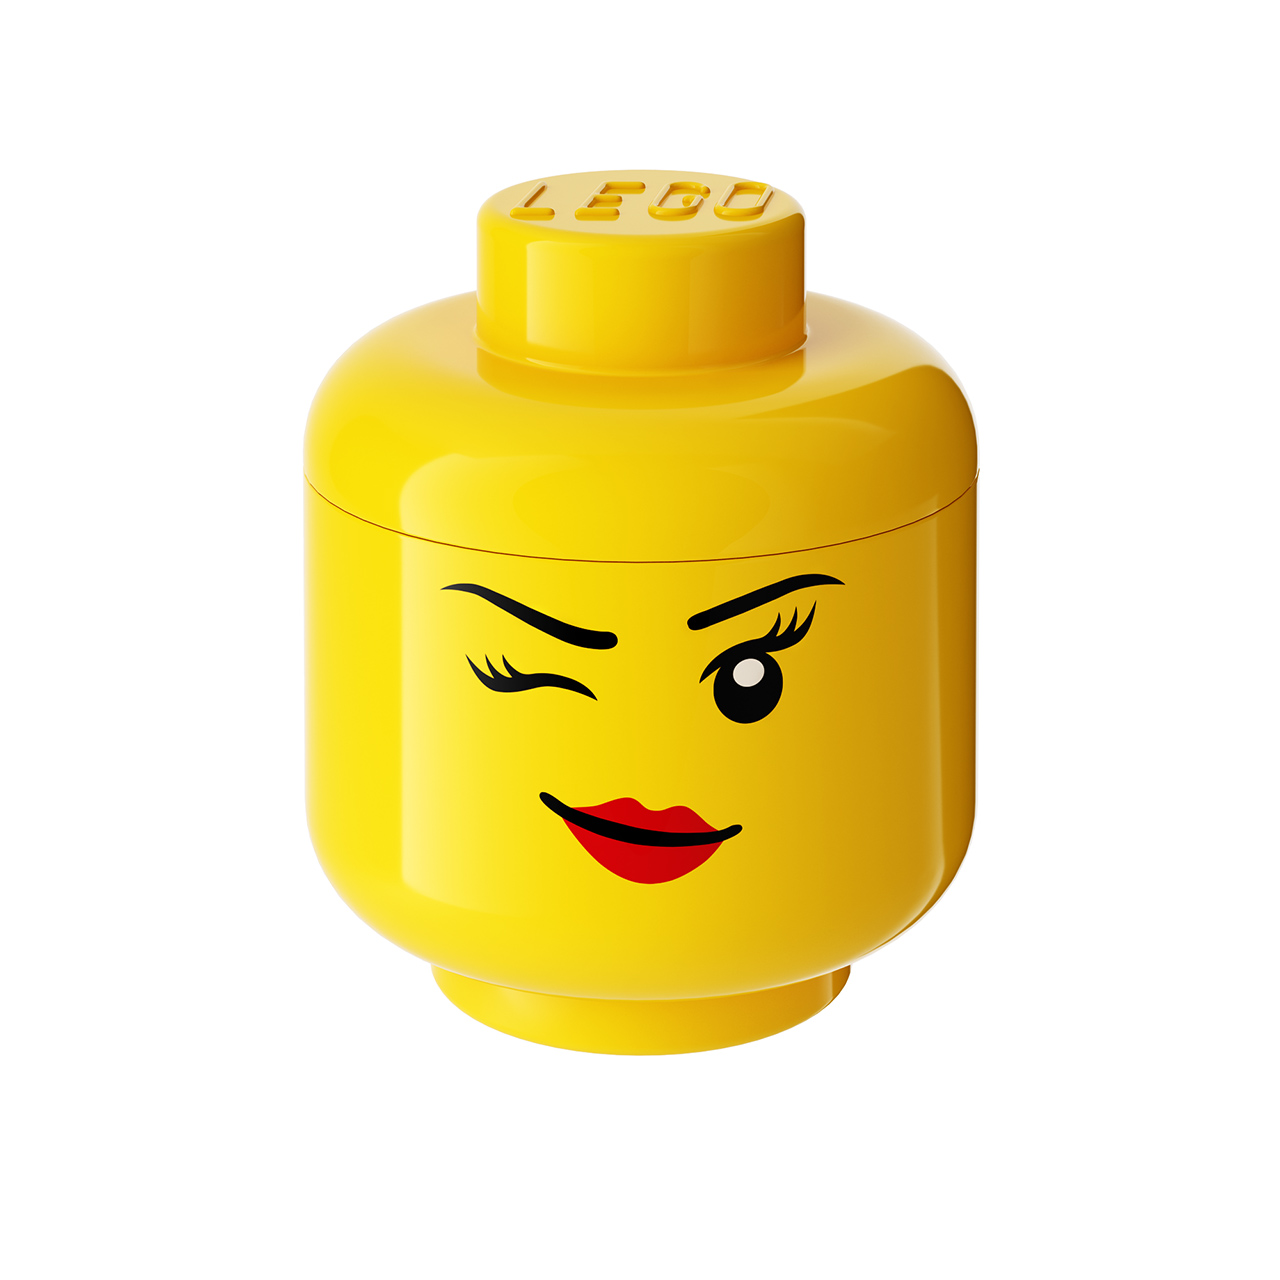 Winking Small Storage Head by Lego